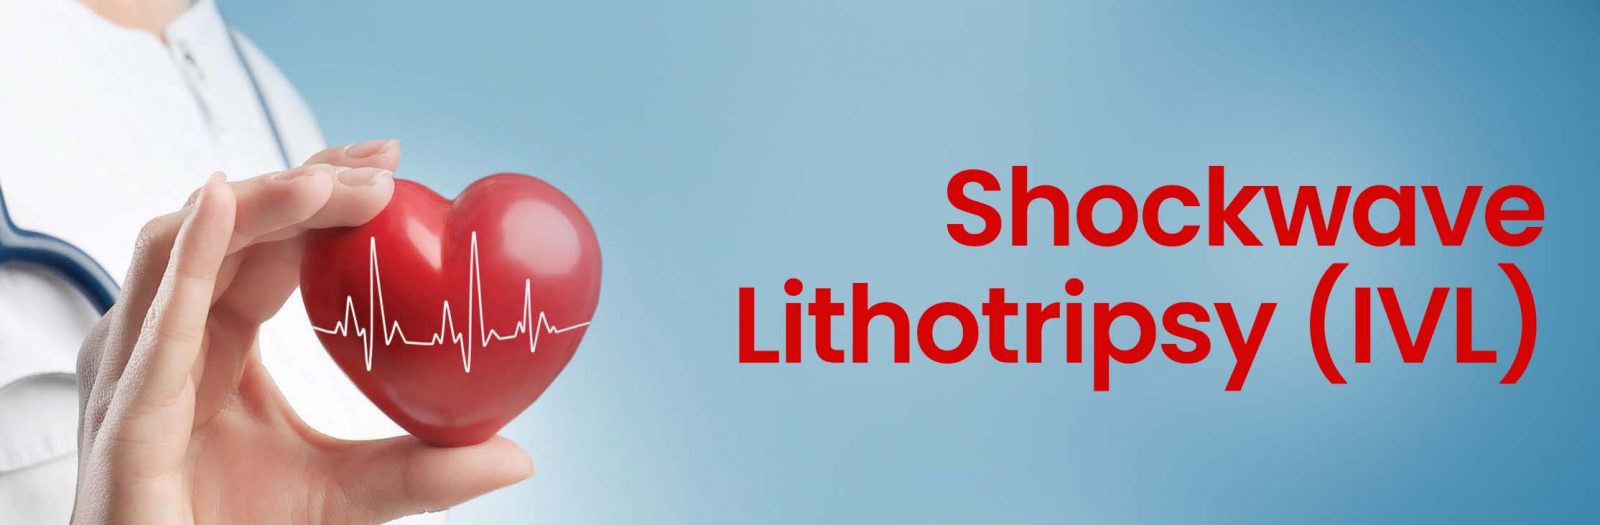 Best Shockwave Lithotripsy in Indore